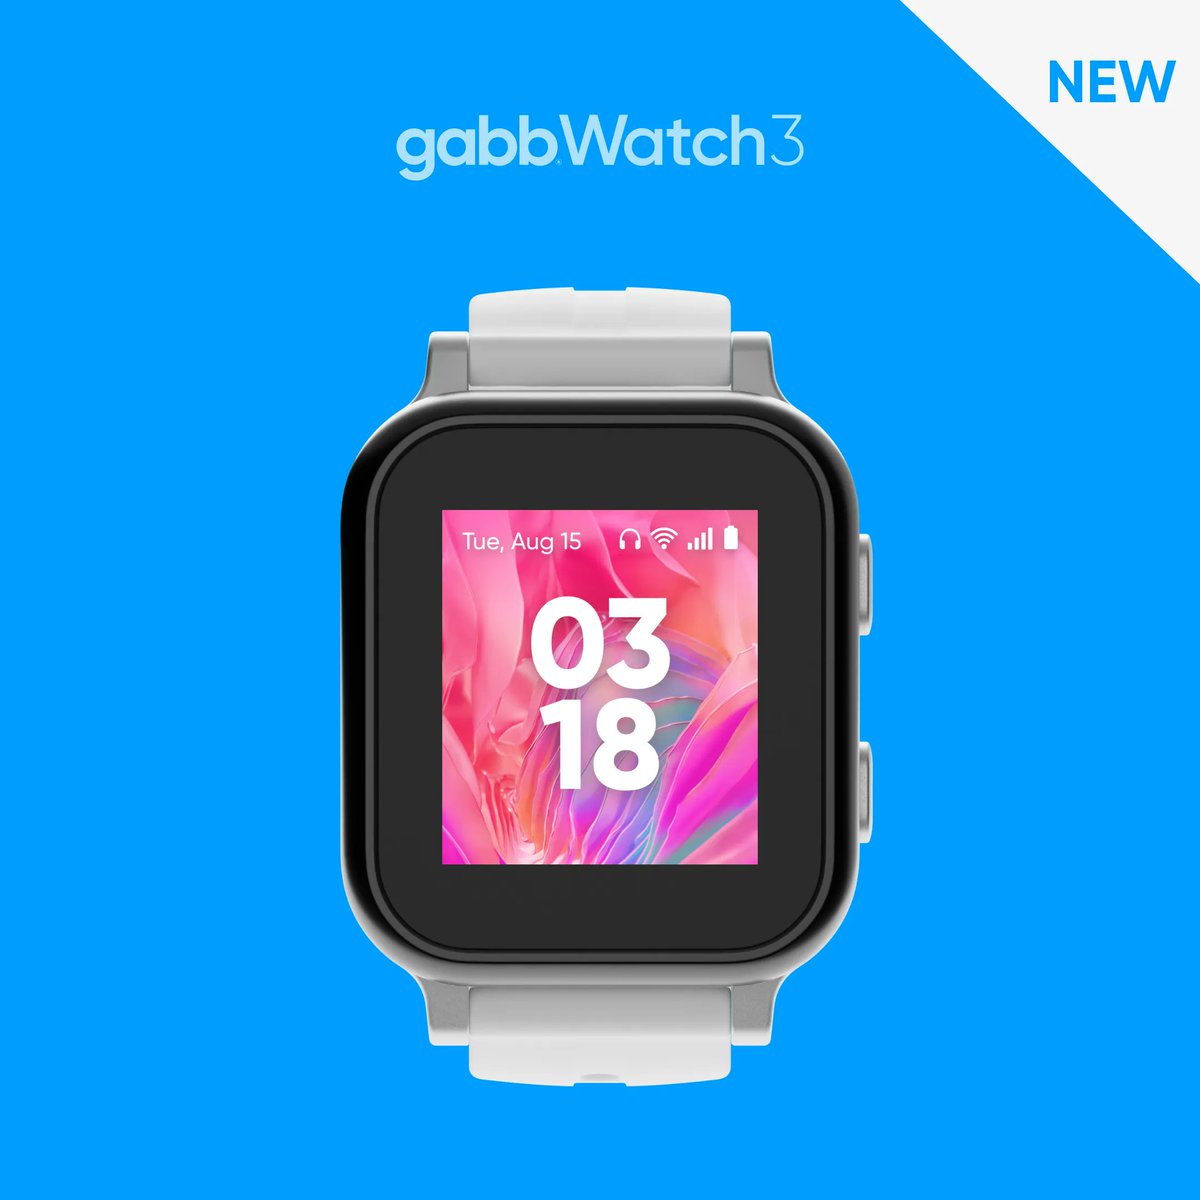 Have you seen the new Gabb Watch 3? buff.ly/48nBr7p #OnlineSafety #GabbWatch #KidsPhone